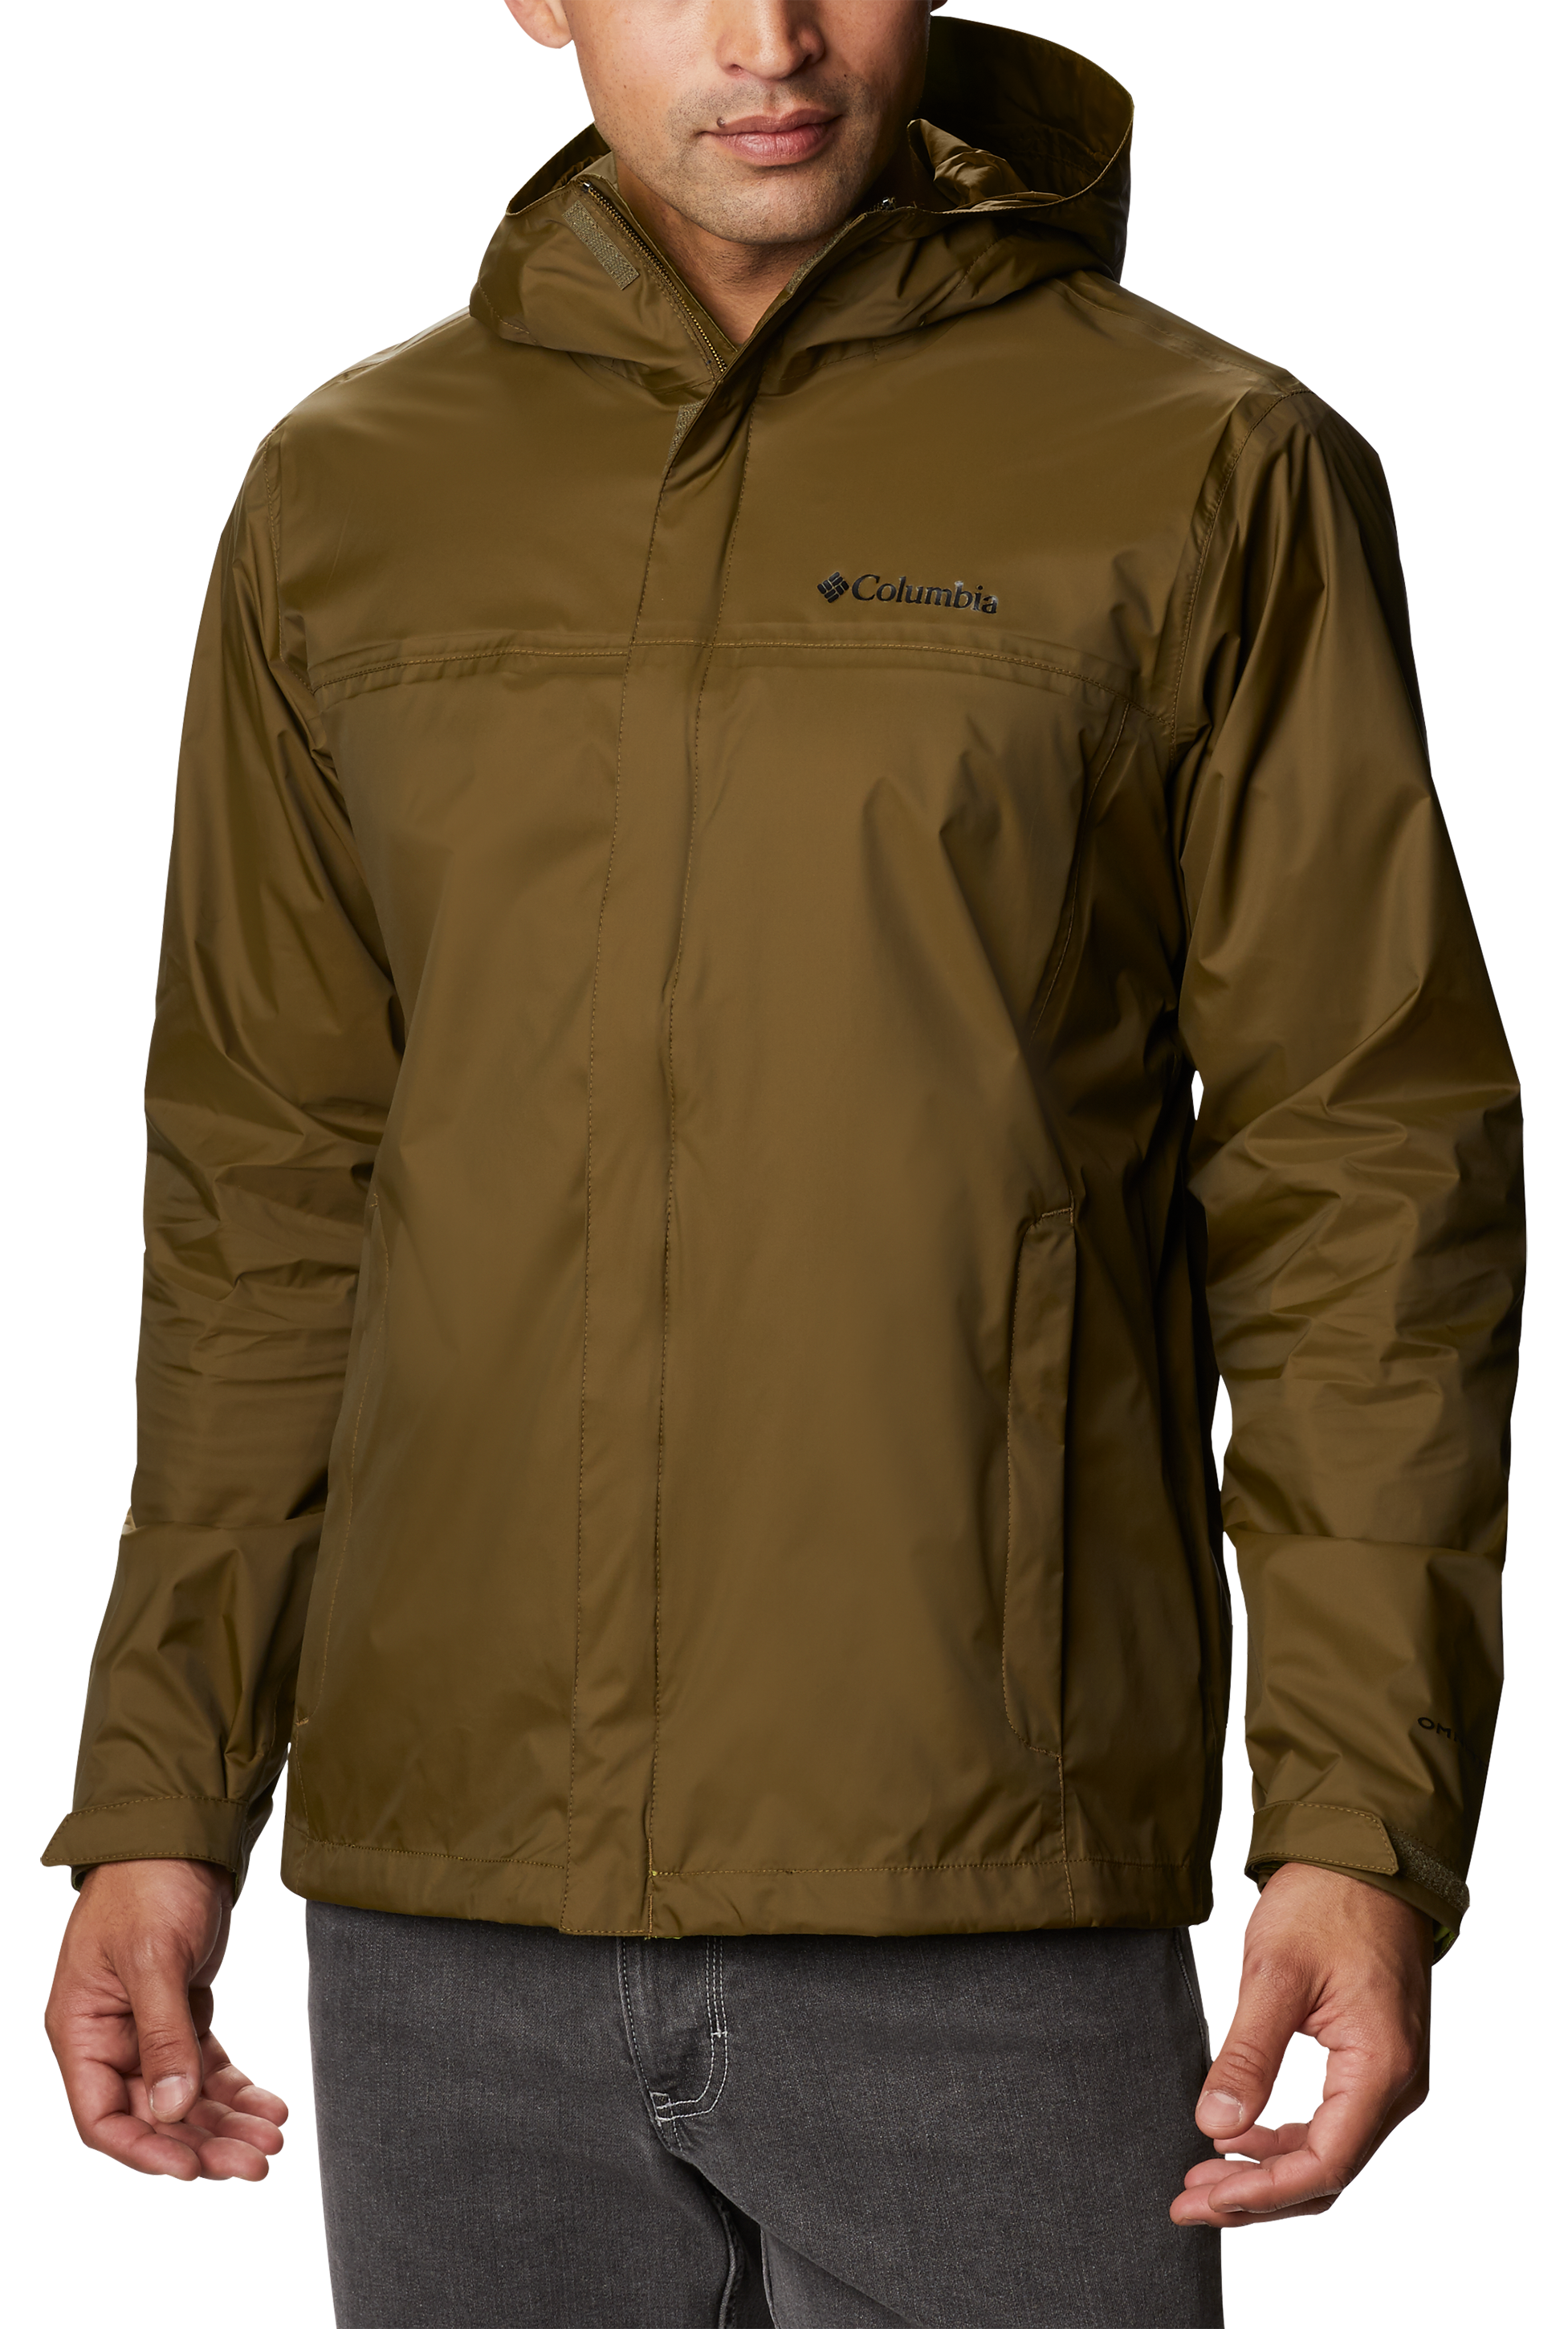 Columbia Watertight II Jacket for Men - New Olive - XL